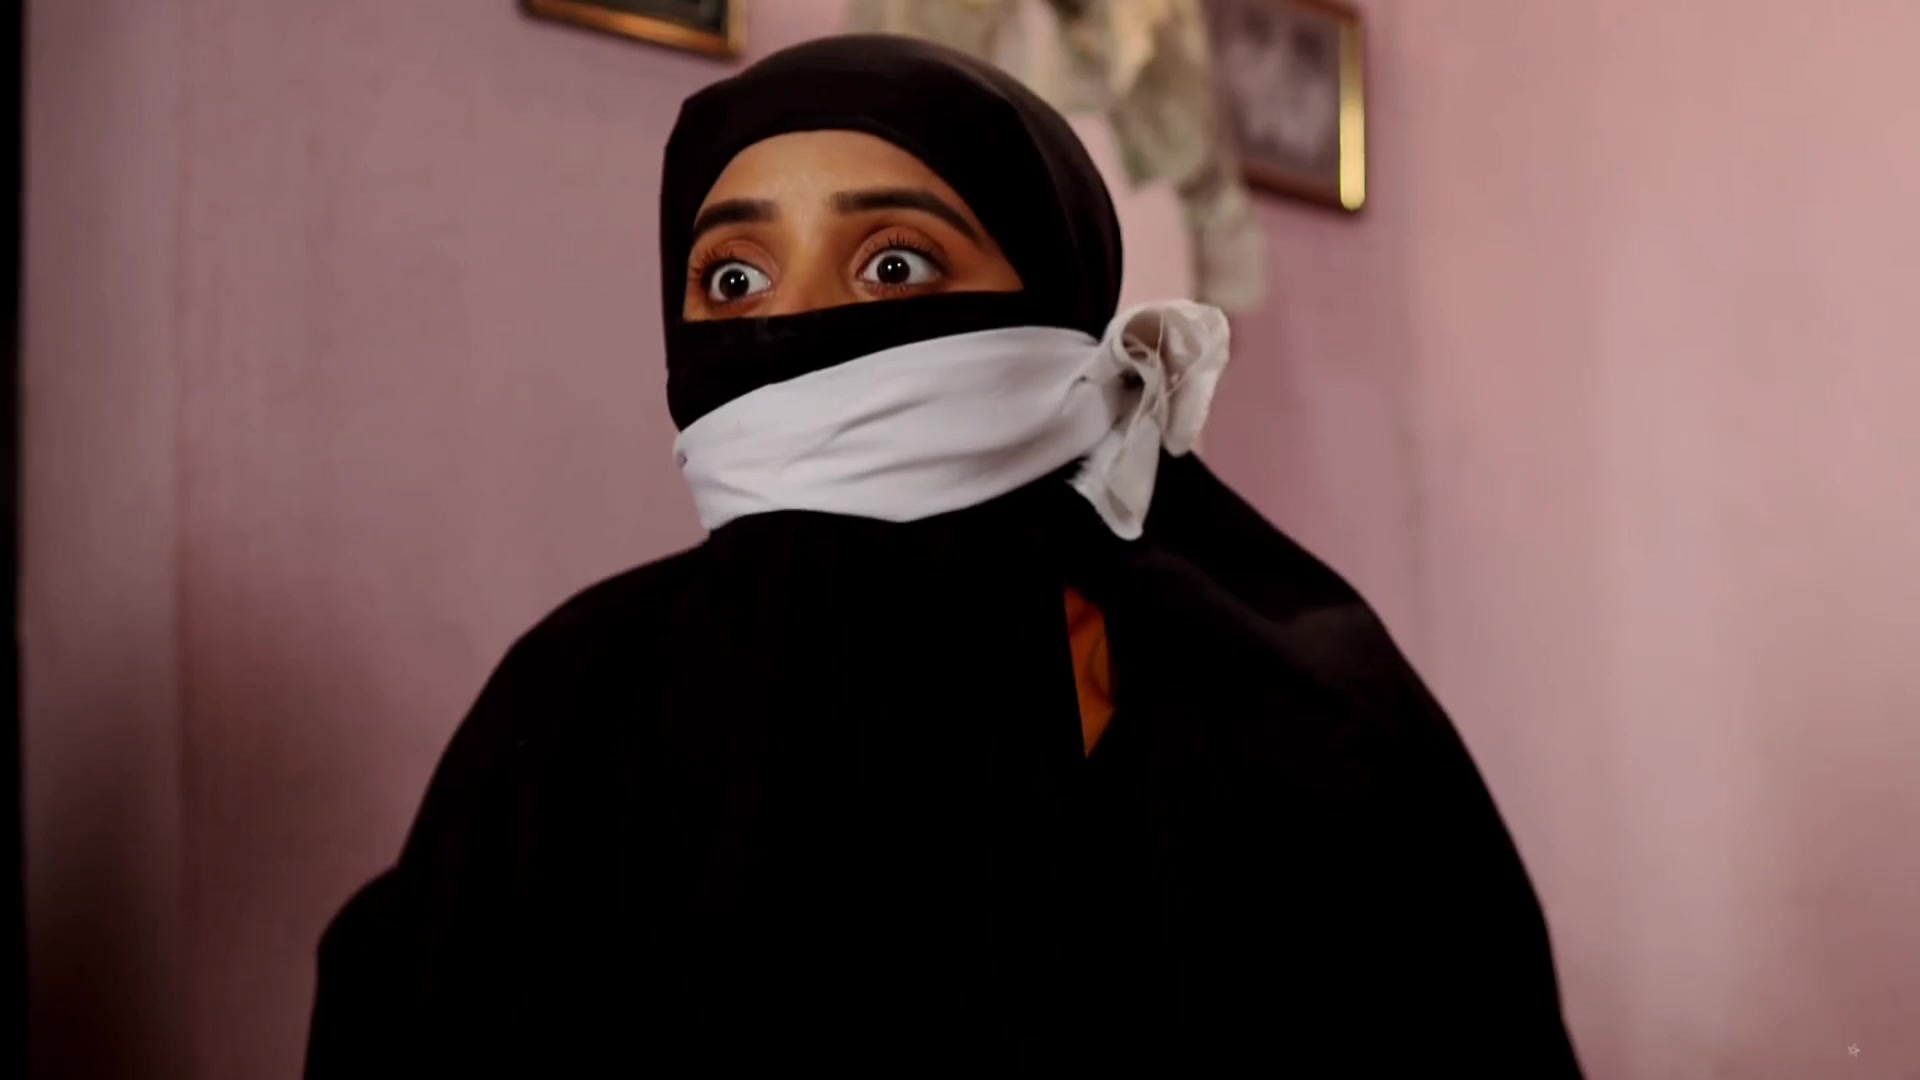 BoundHub - Otm gagged over niqab